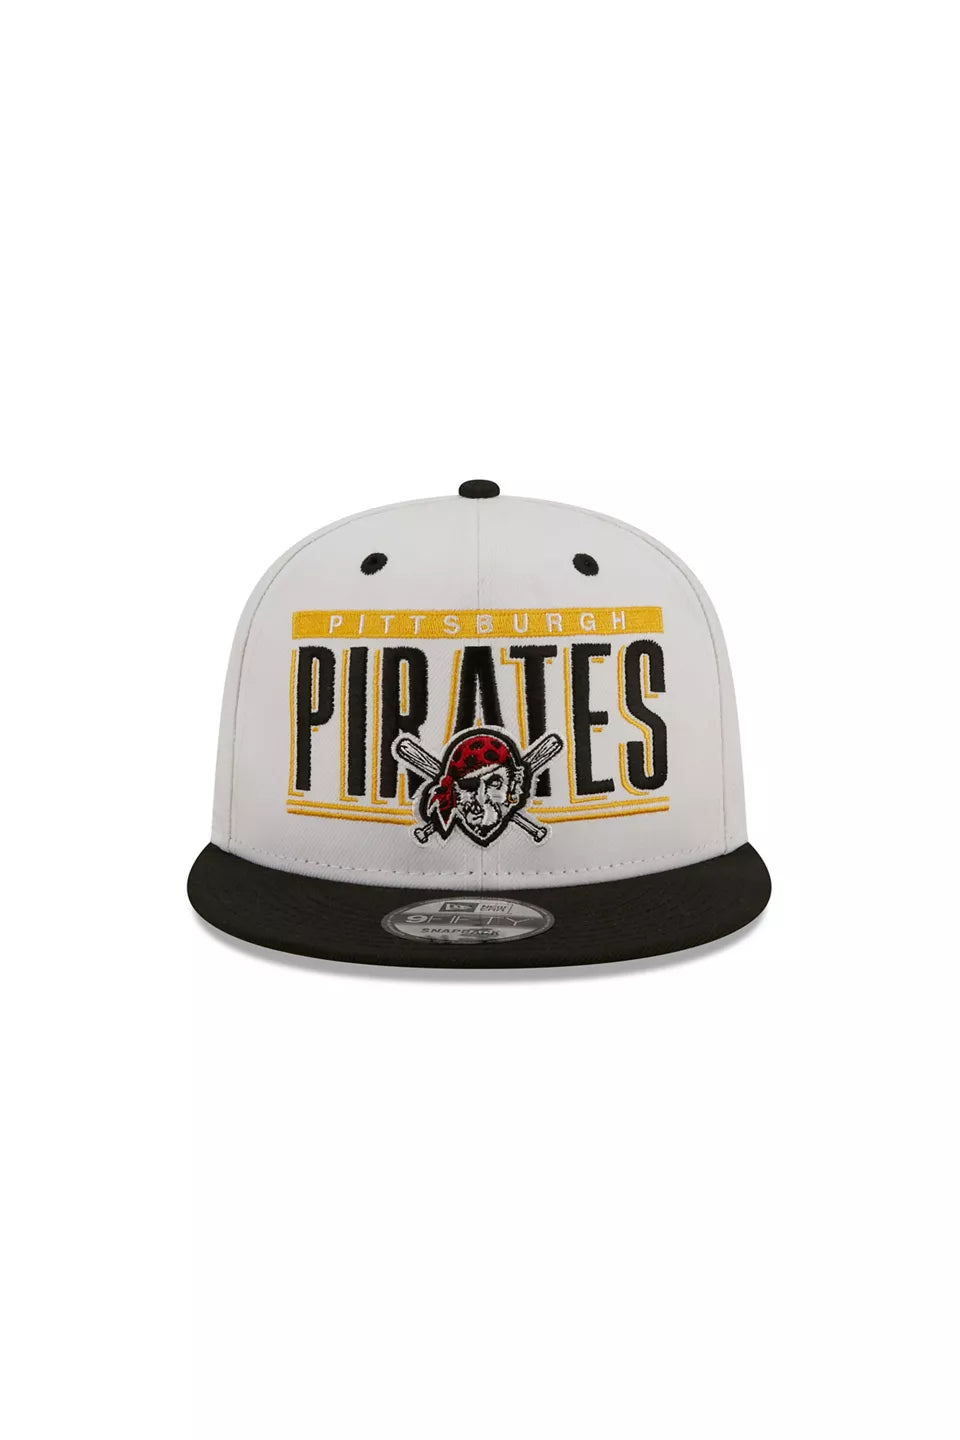 Pittsburgh Pirates New Era Retro Title 9FIFTY Snapback Hat - White/Black/Yellow